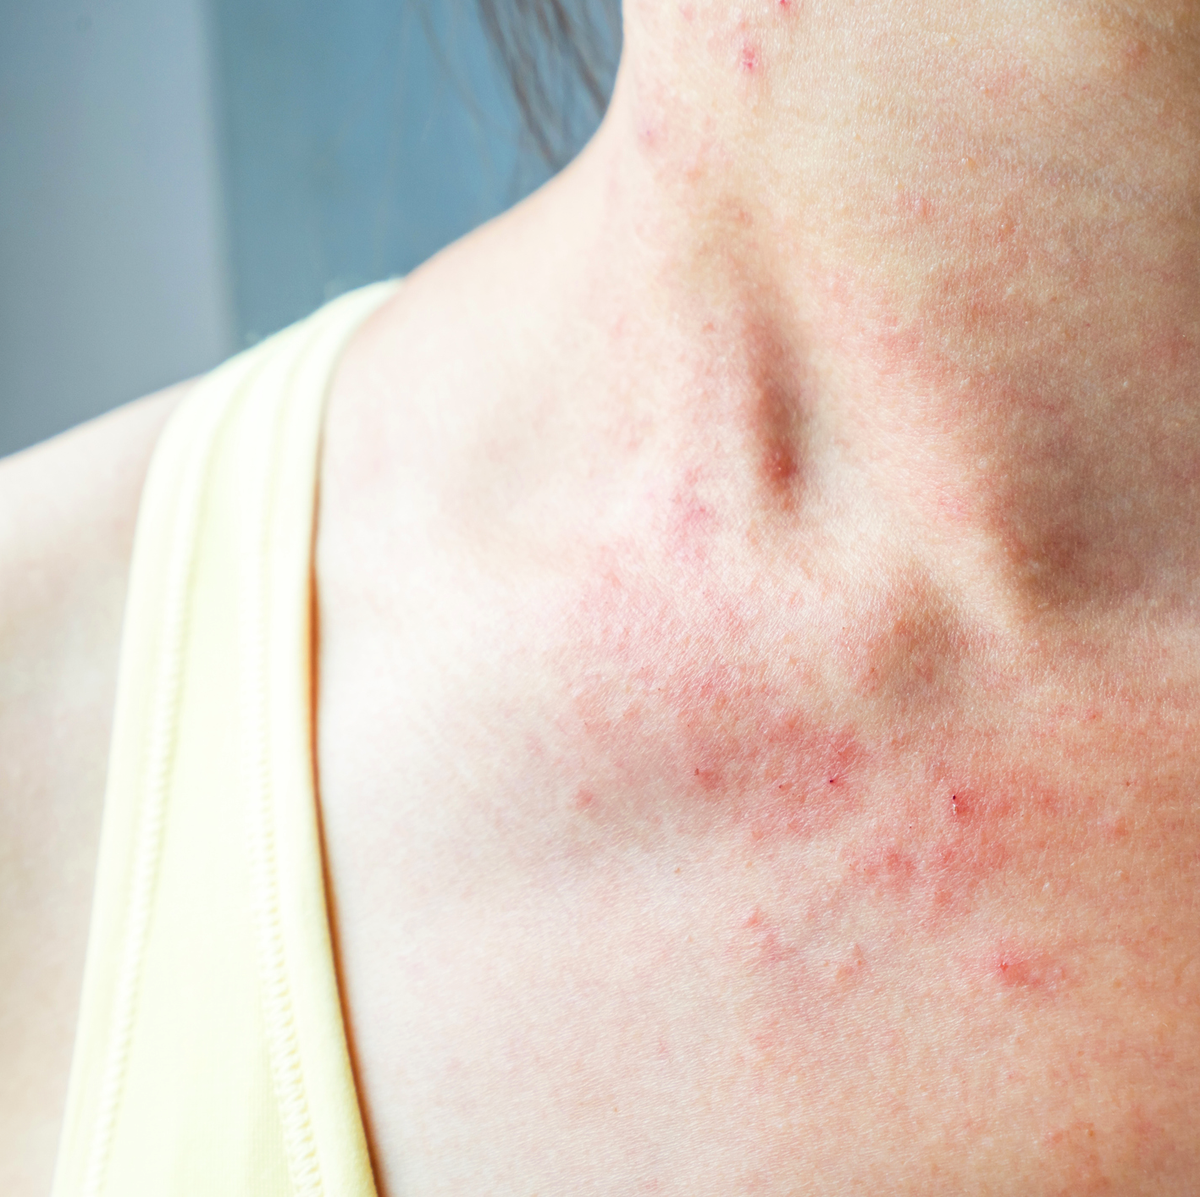 26 Common Rash Pictures - How to ID Skin Rash Symptoms